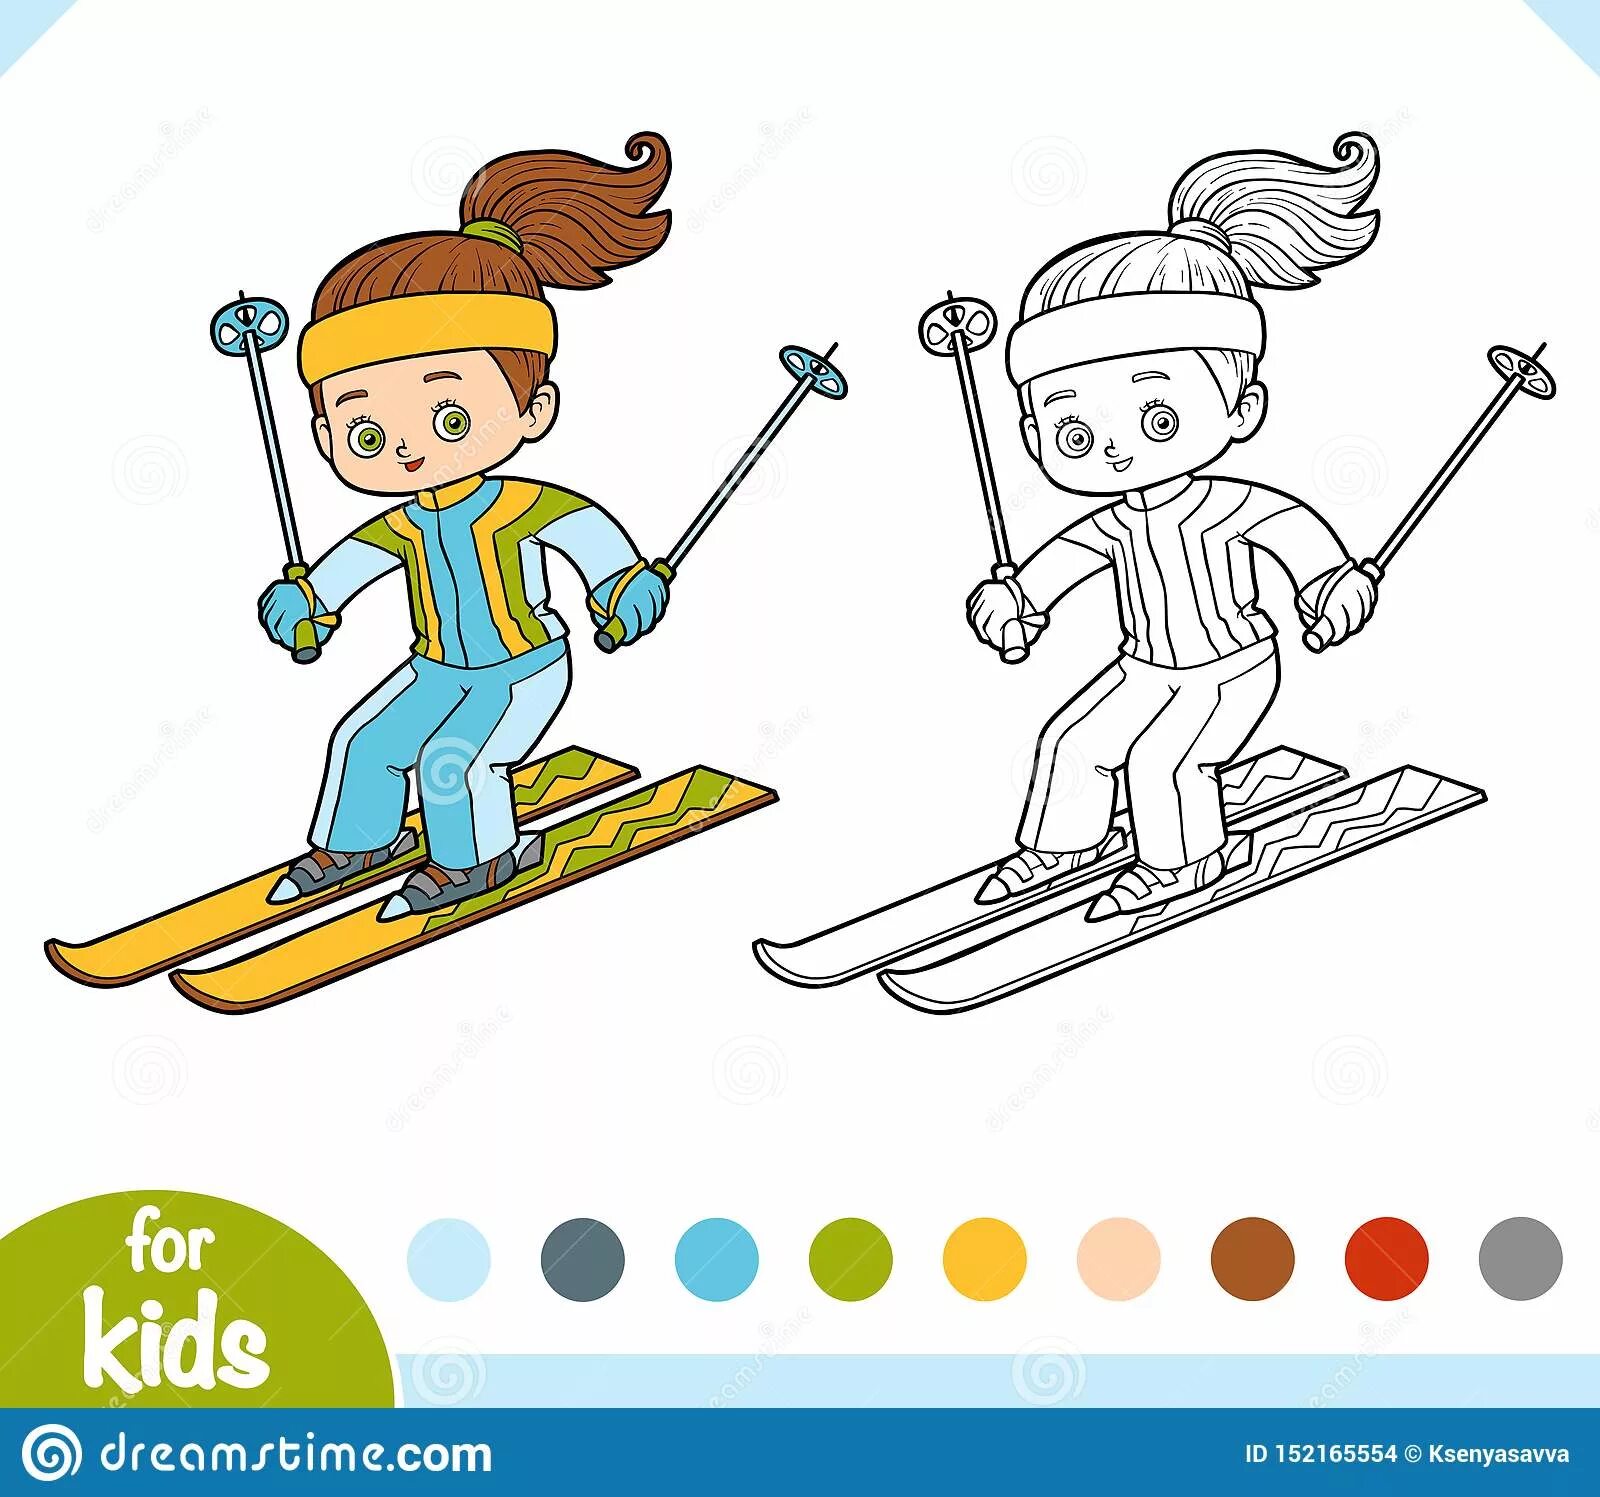 Entertaining senior skier coloring page